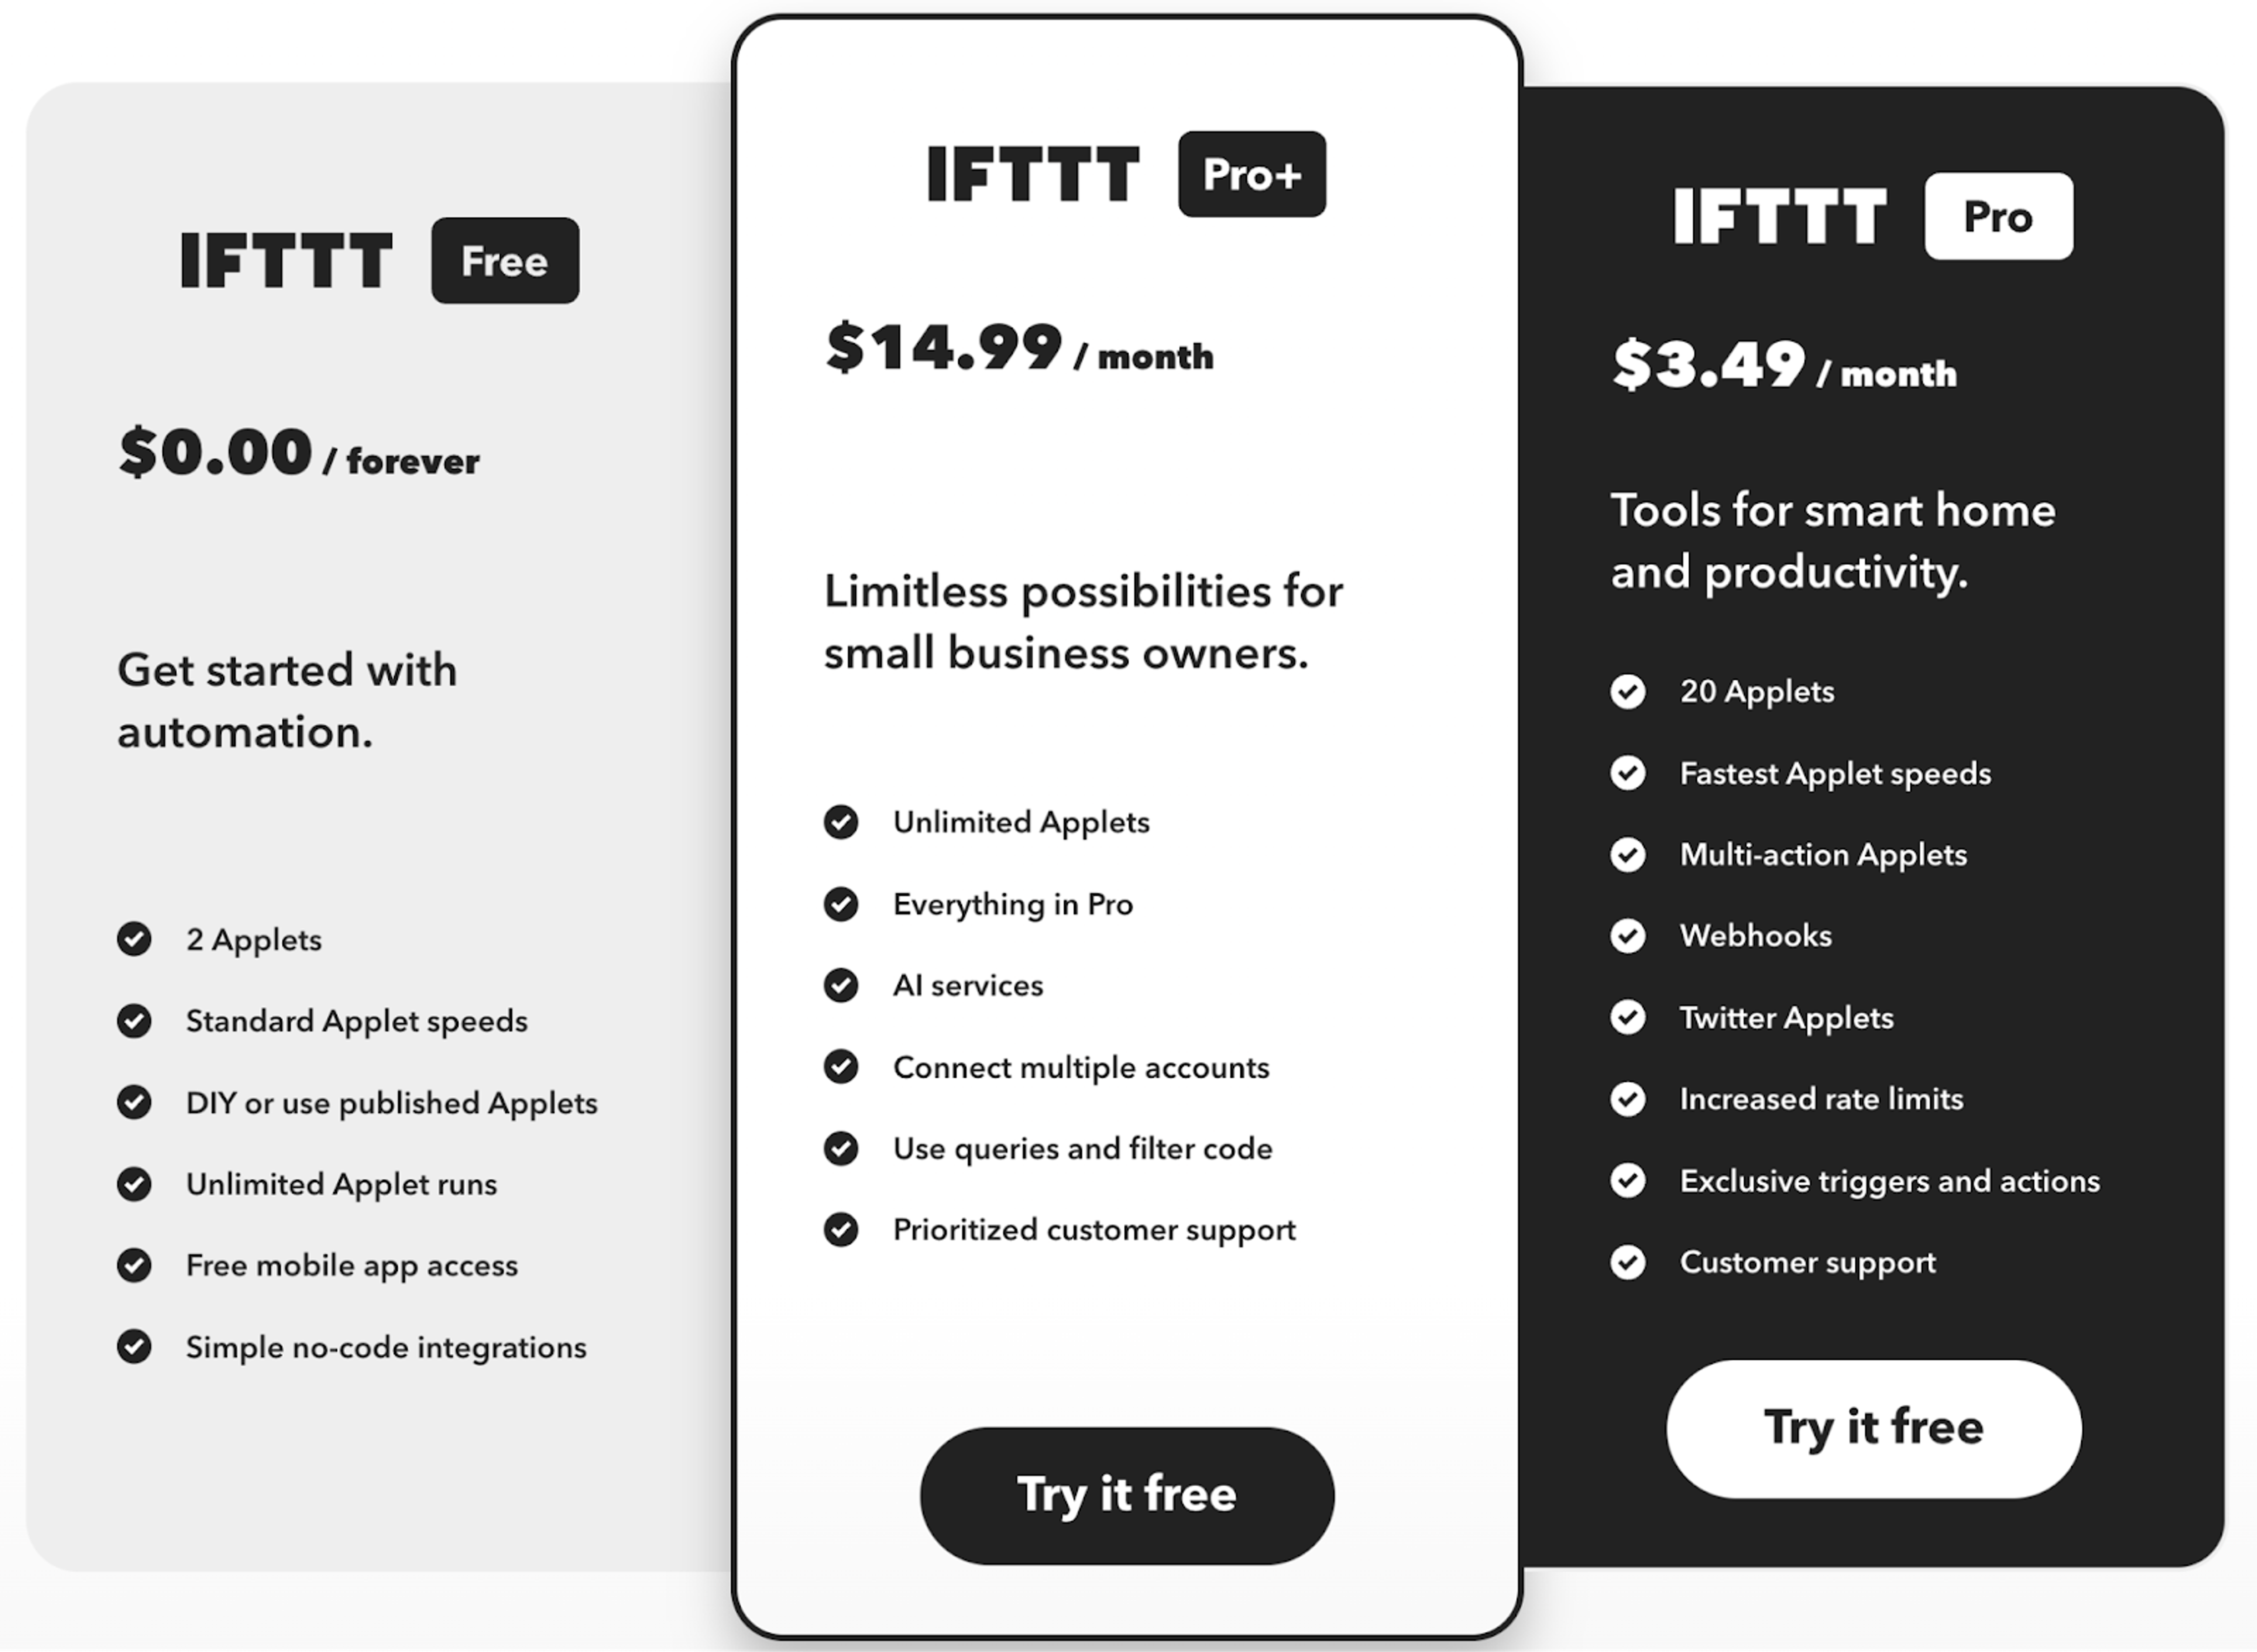 IFTTT's pricing